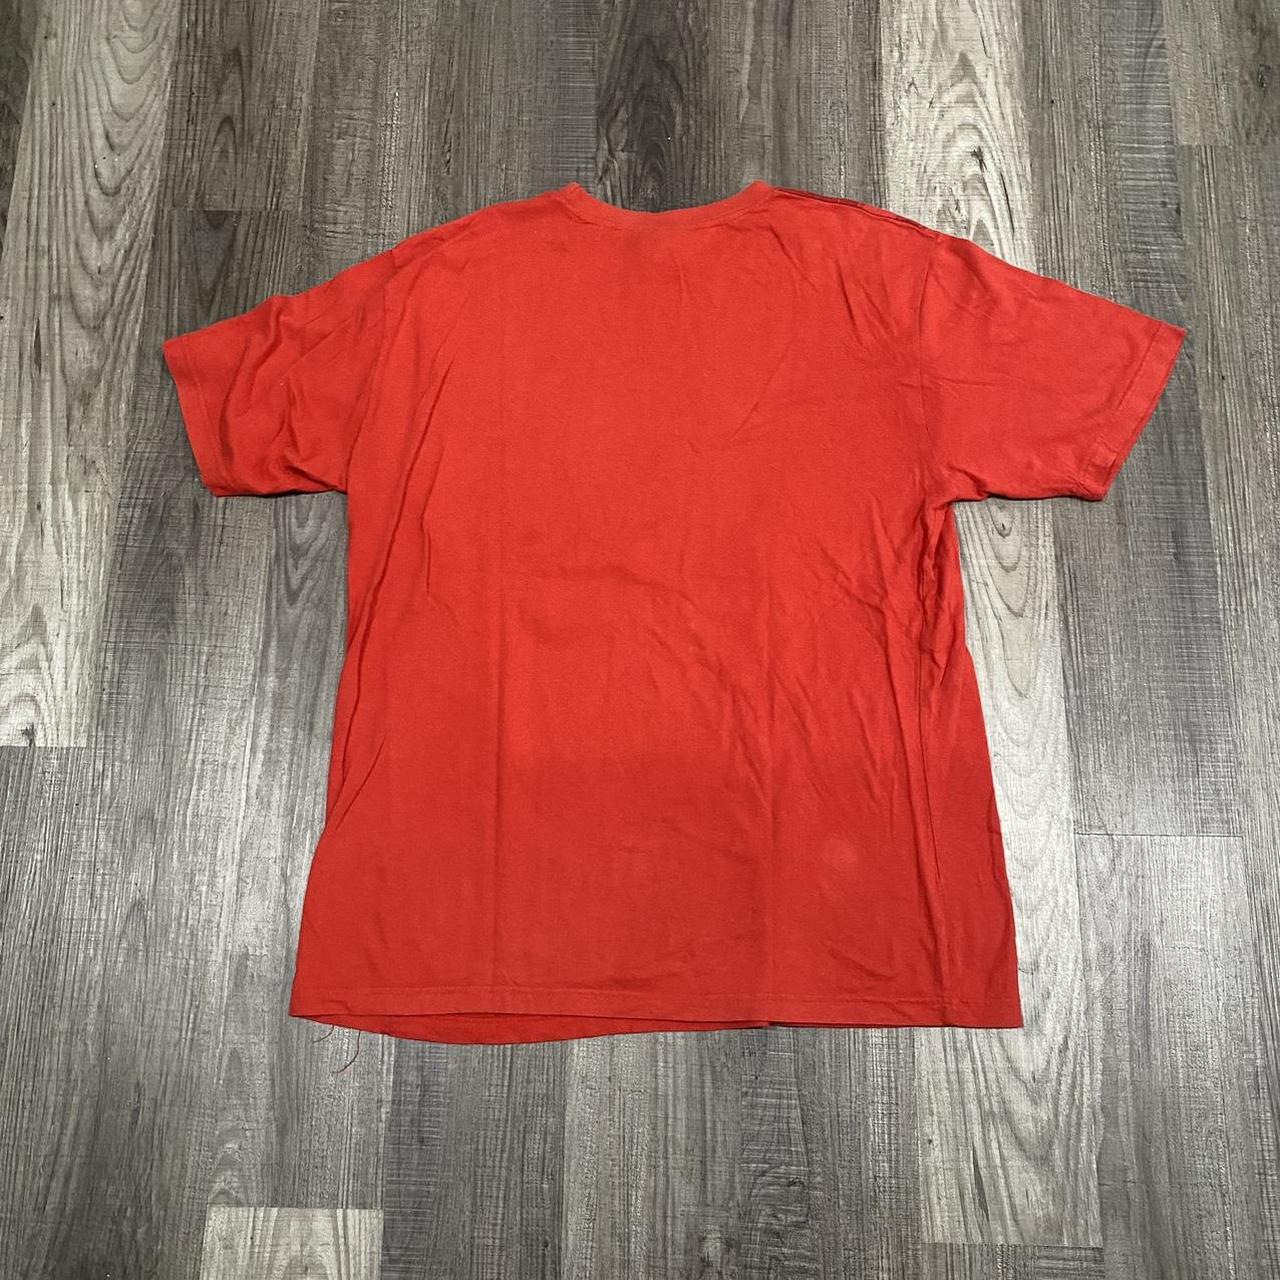 Southpole Men's Red T-shirt | Depop